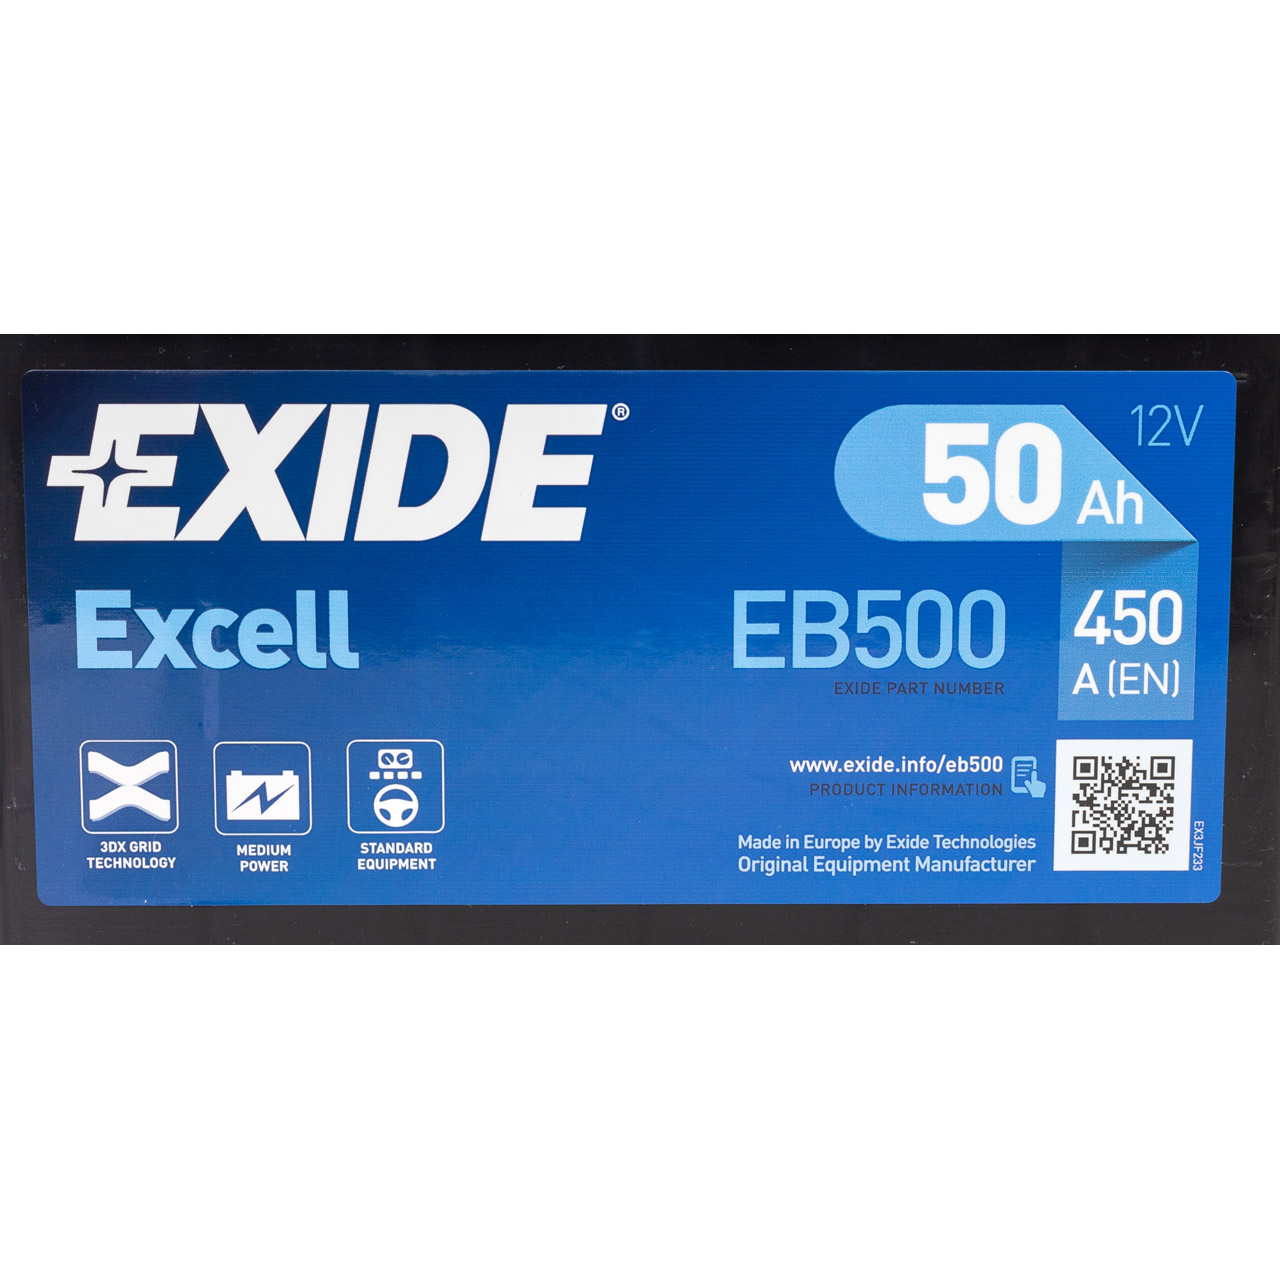 Exide Excell 12V 50Ah 450A/EN EB500 Autobatterie Exide. TecDoc